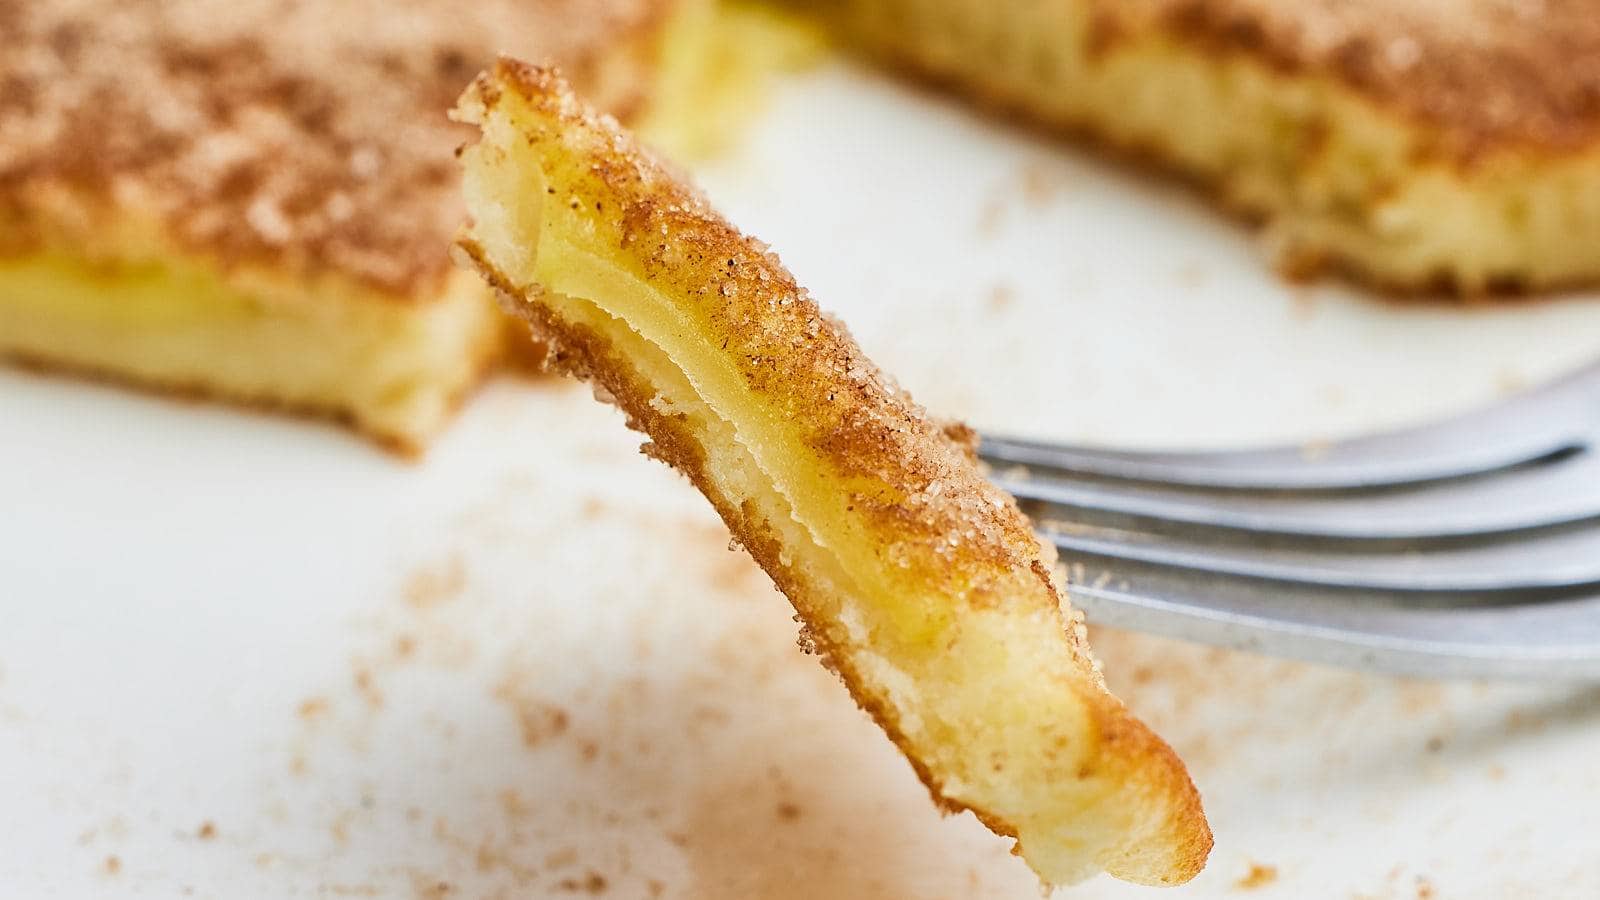 Apple Pancakes (Apfelpfannkuchen) recipe by Cheerful Cook.